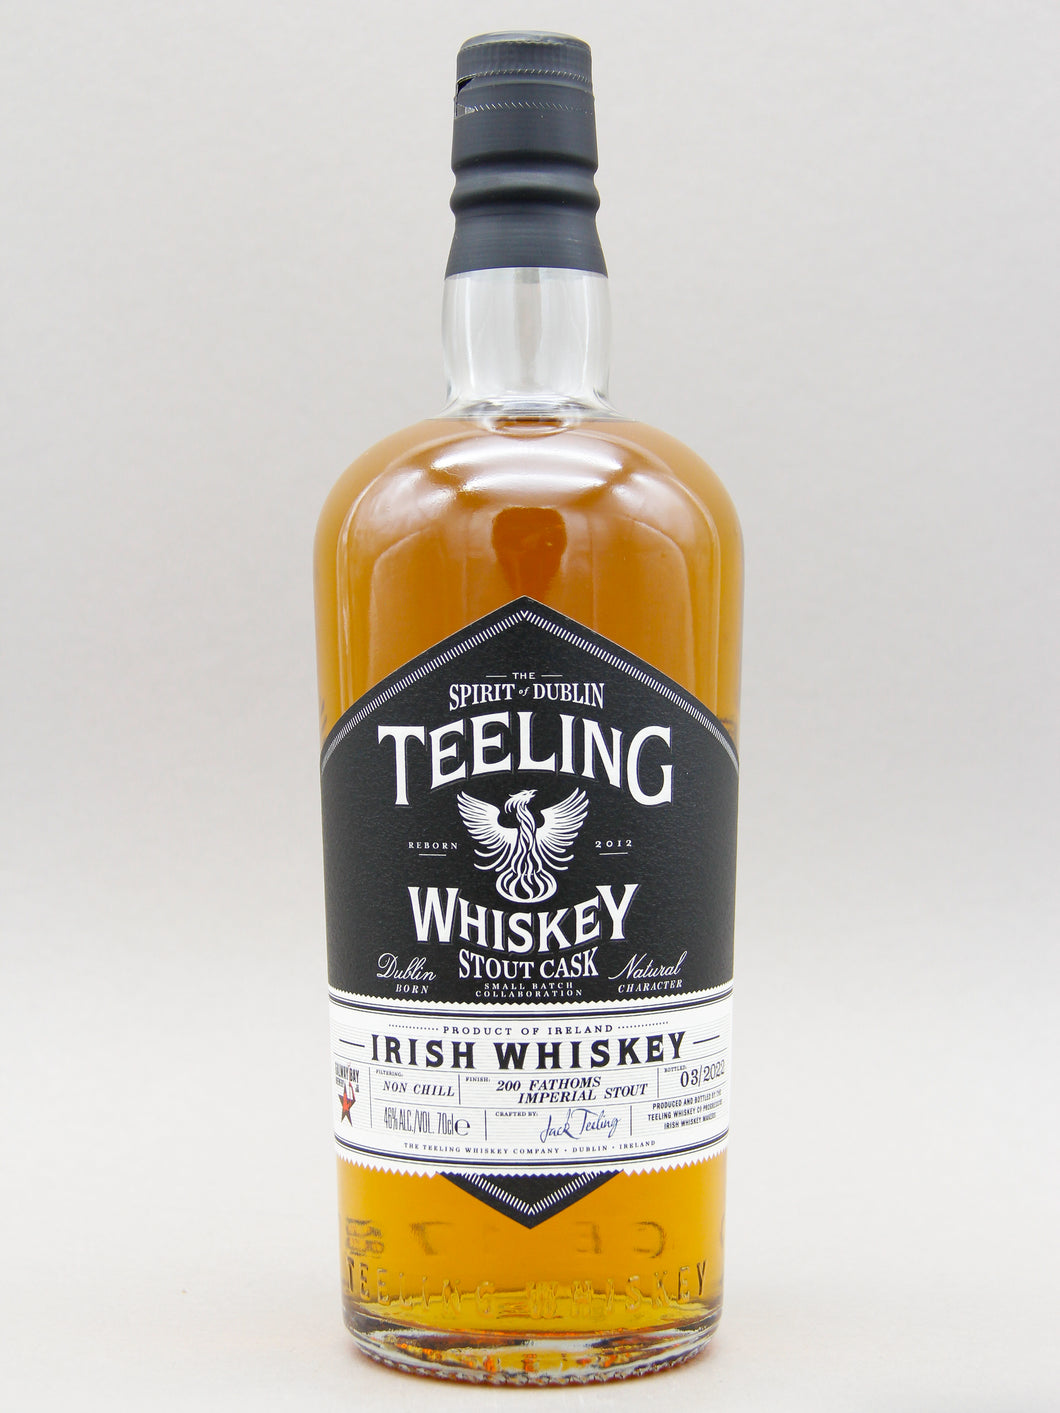 Teeling Stout Cask Finish Irish Whiskey (46%, 70cl)